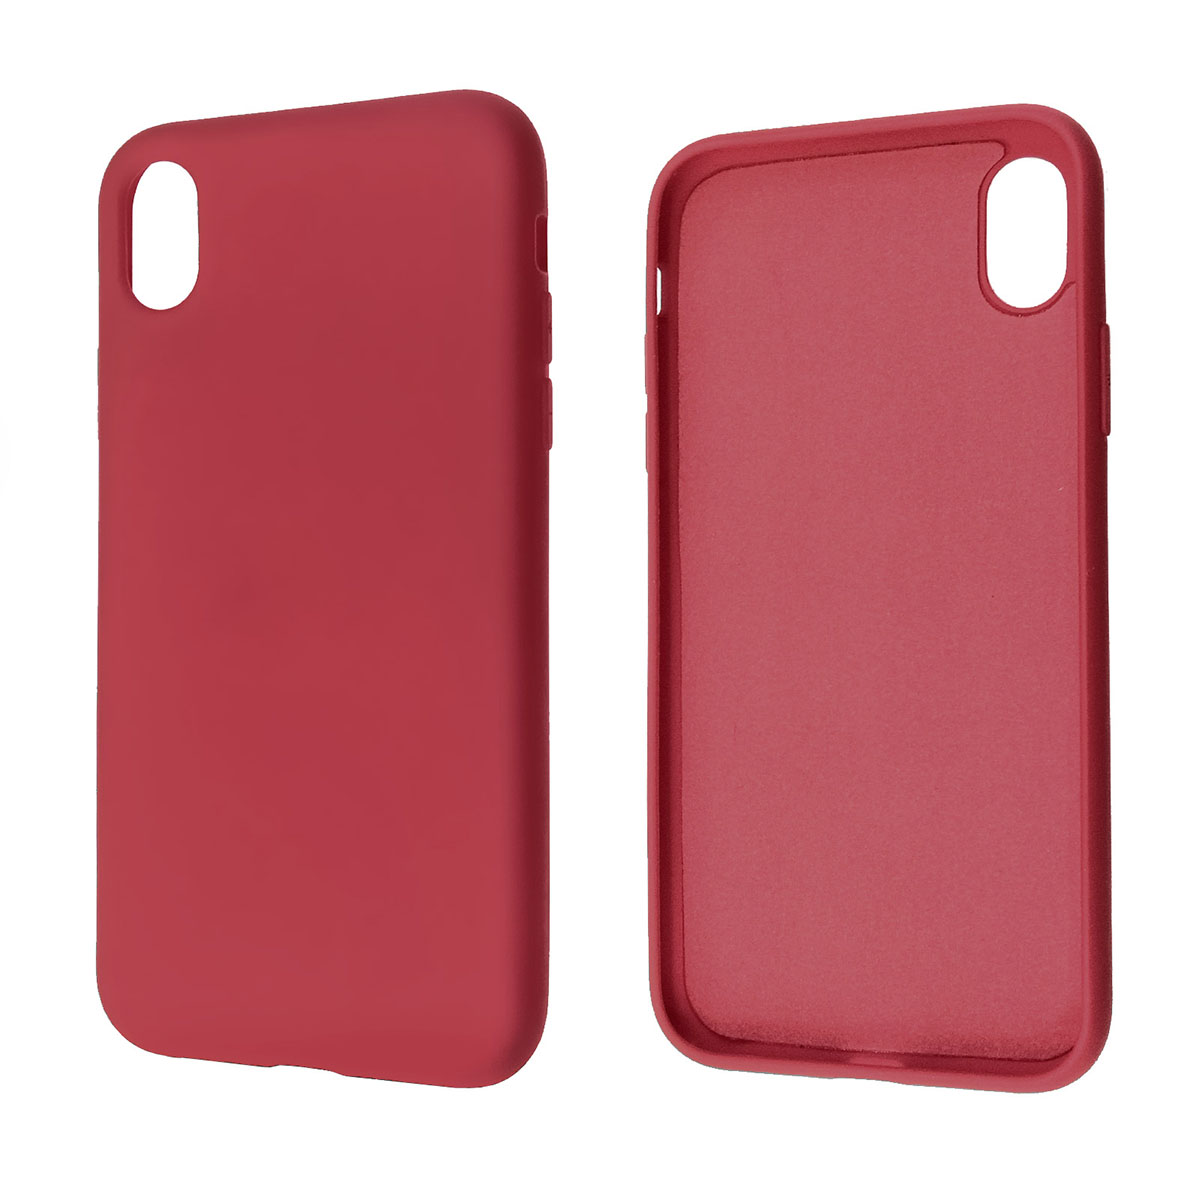 Чехол накладка NANO для APPLE iPhone XR, силикон, бархат, цвет бордовый